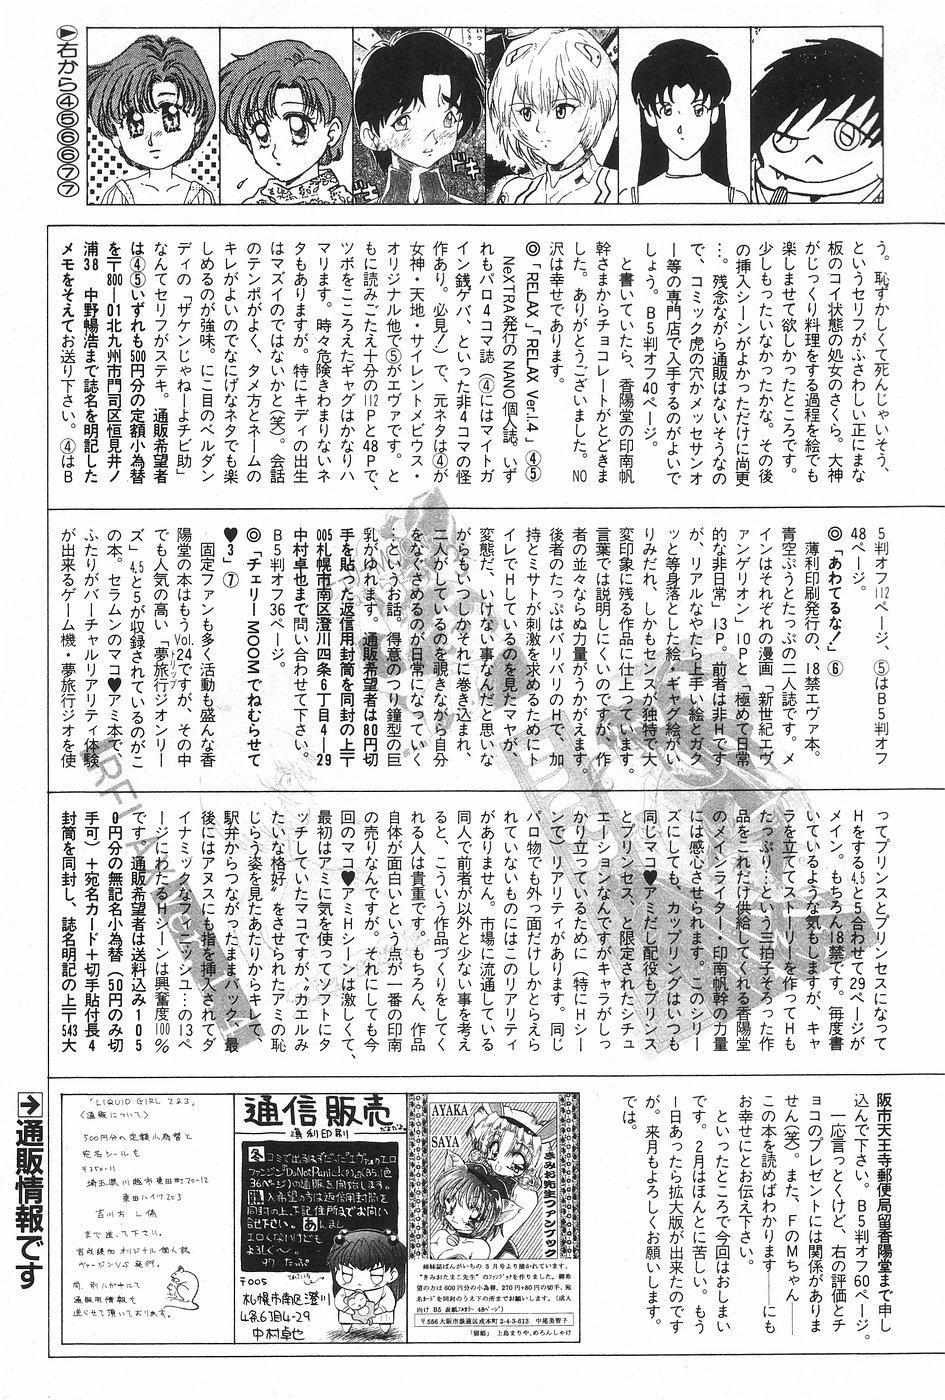 Manga Hotmilk 1997-04 137